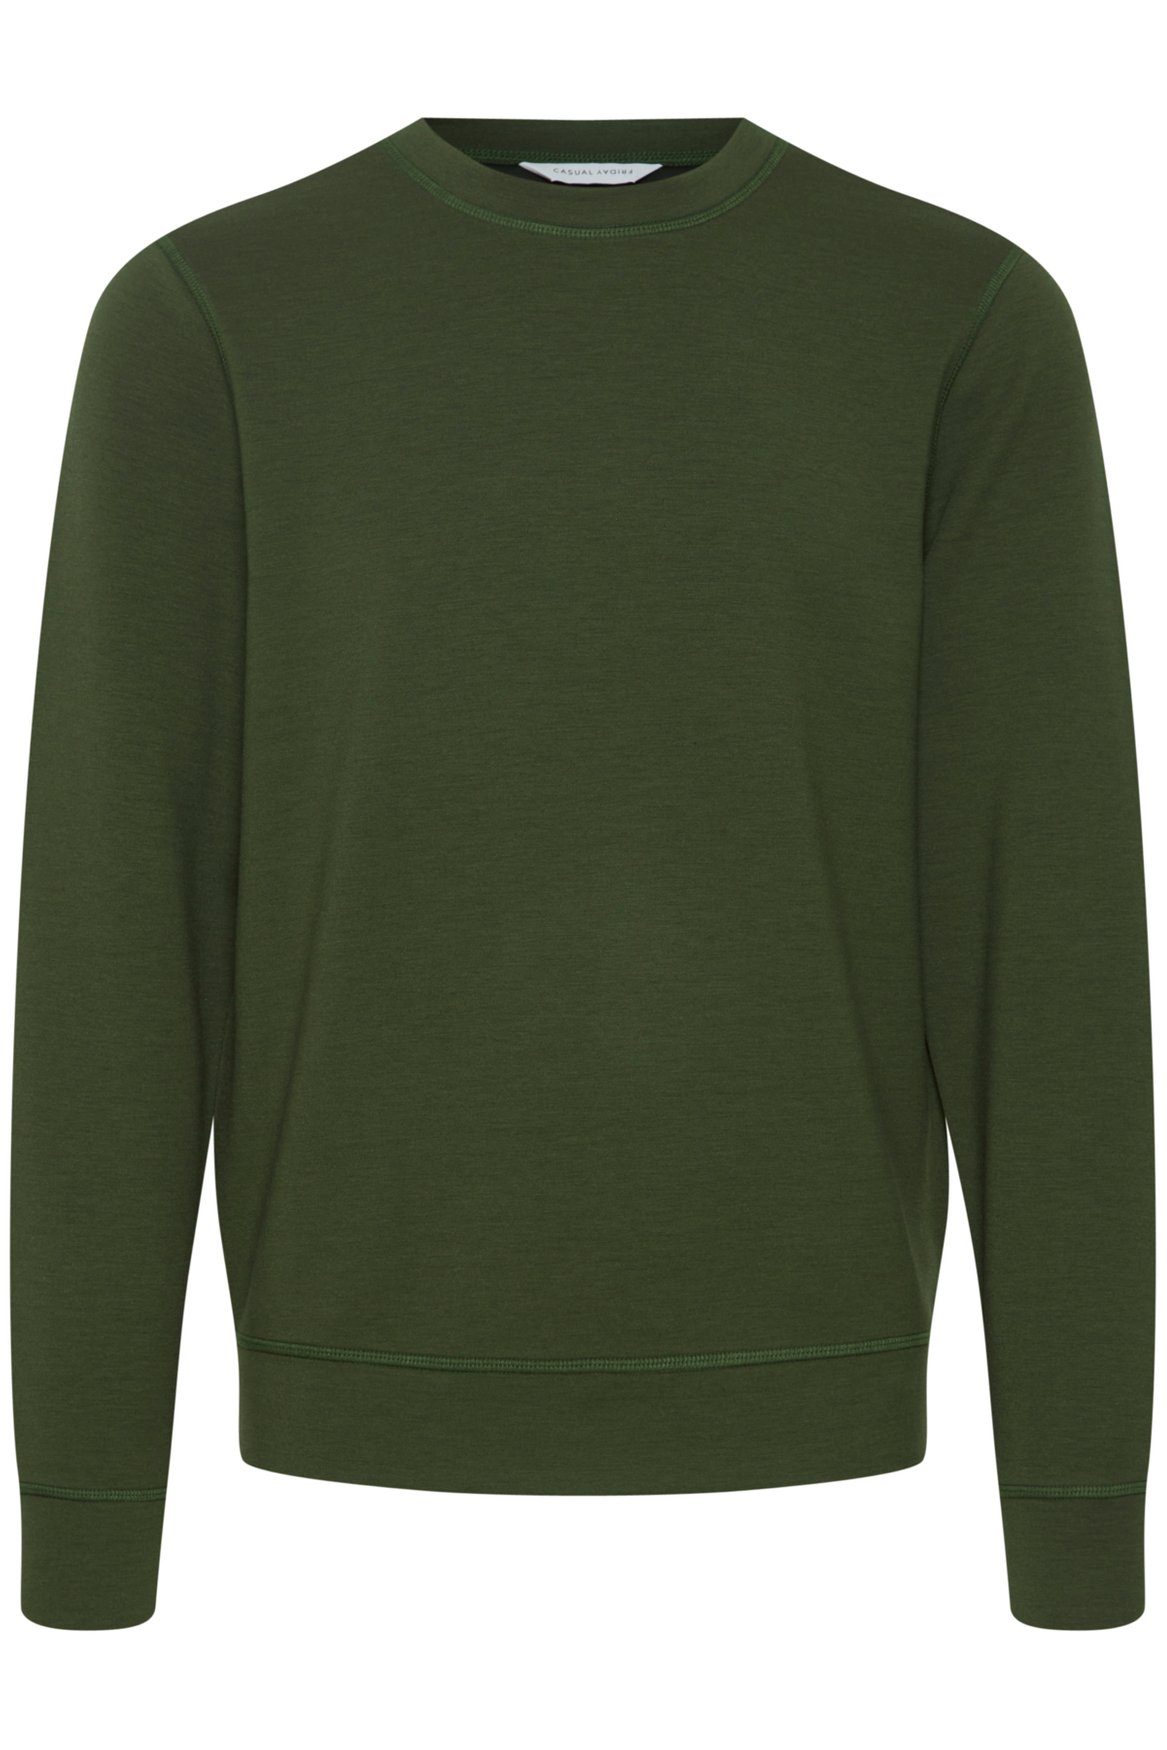 Casual Friday Sweatshirt Basic Langarm Grün in 5917 Pullover Rundhals CFSebastian